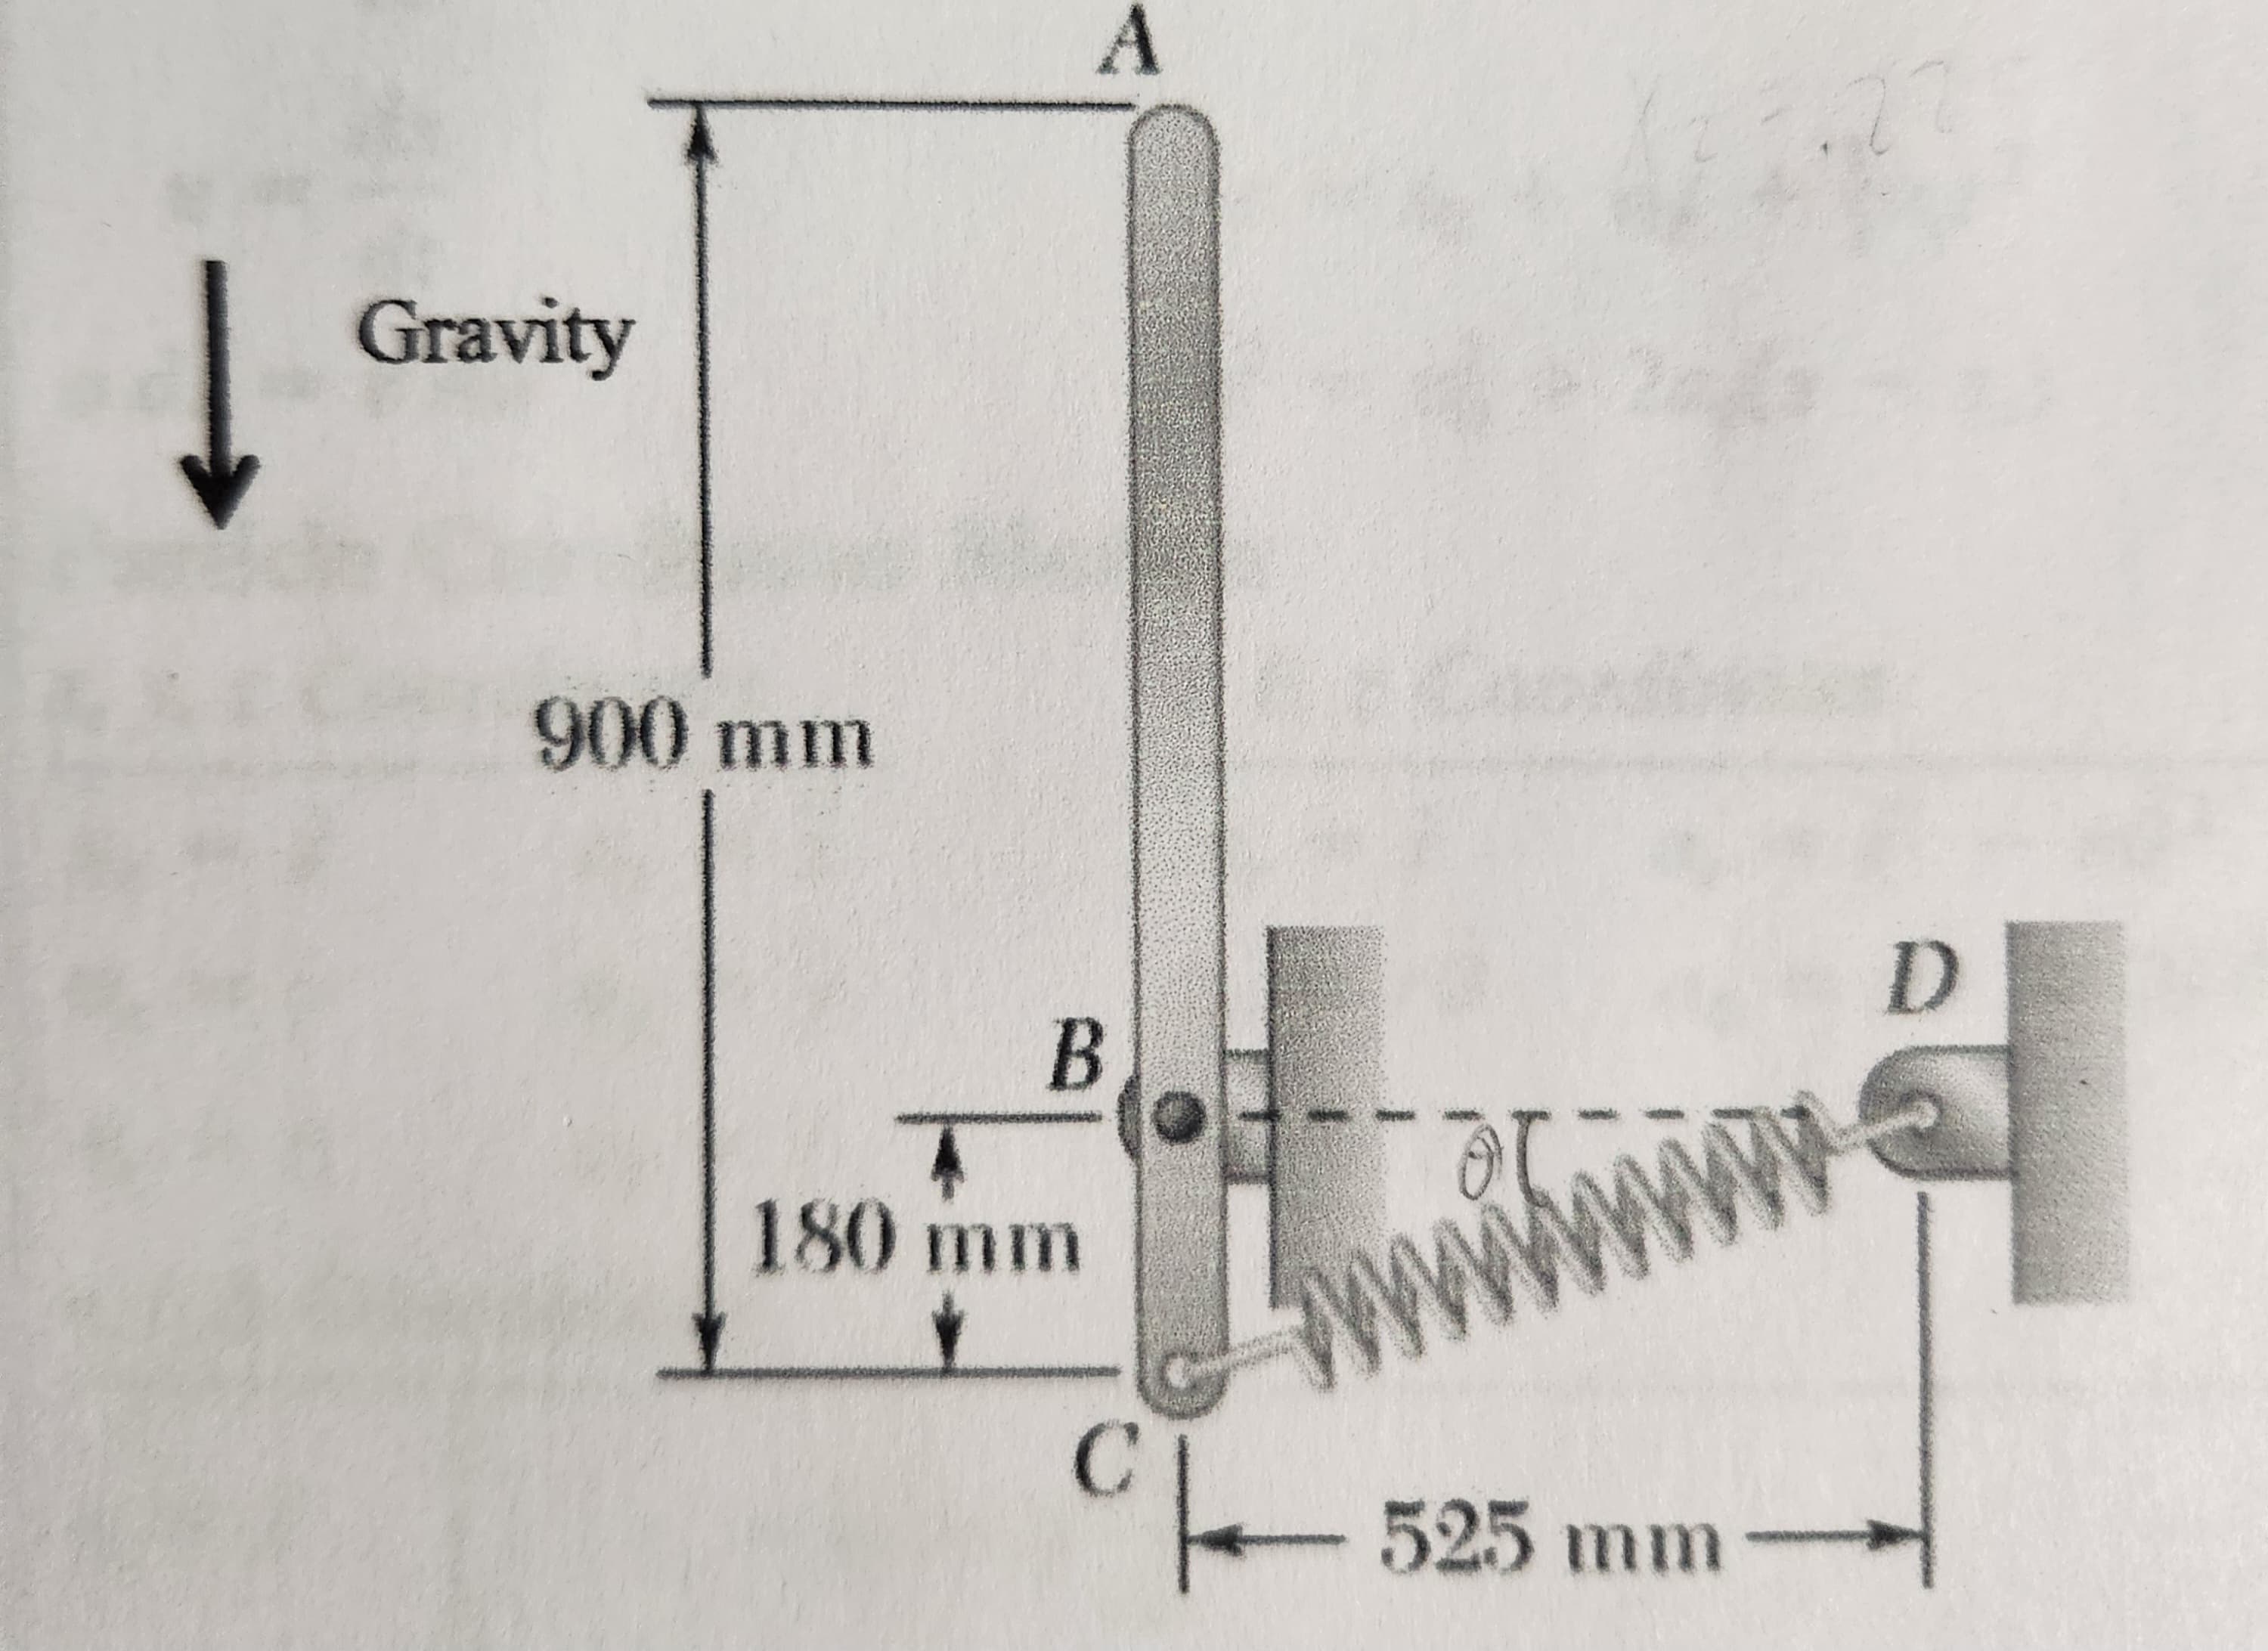 Gravity
900 mm
A
B
180 mm
C
อ
ww
- 525 mm
22
D